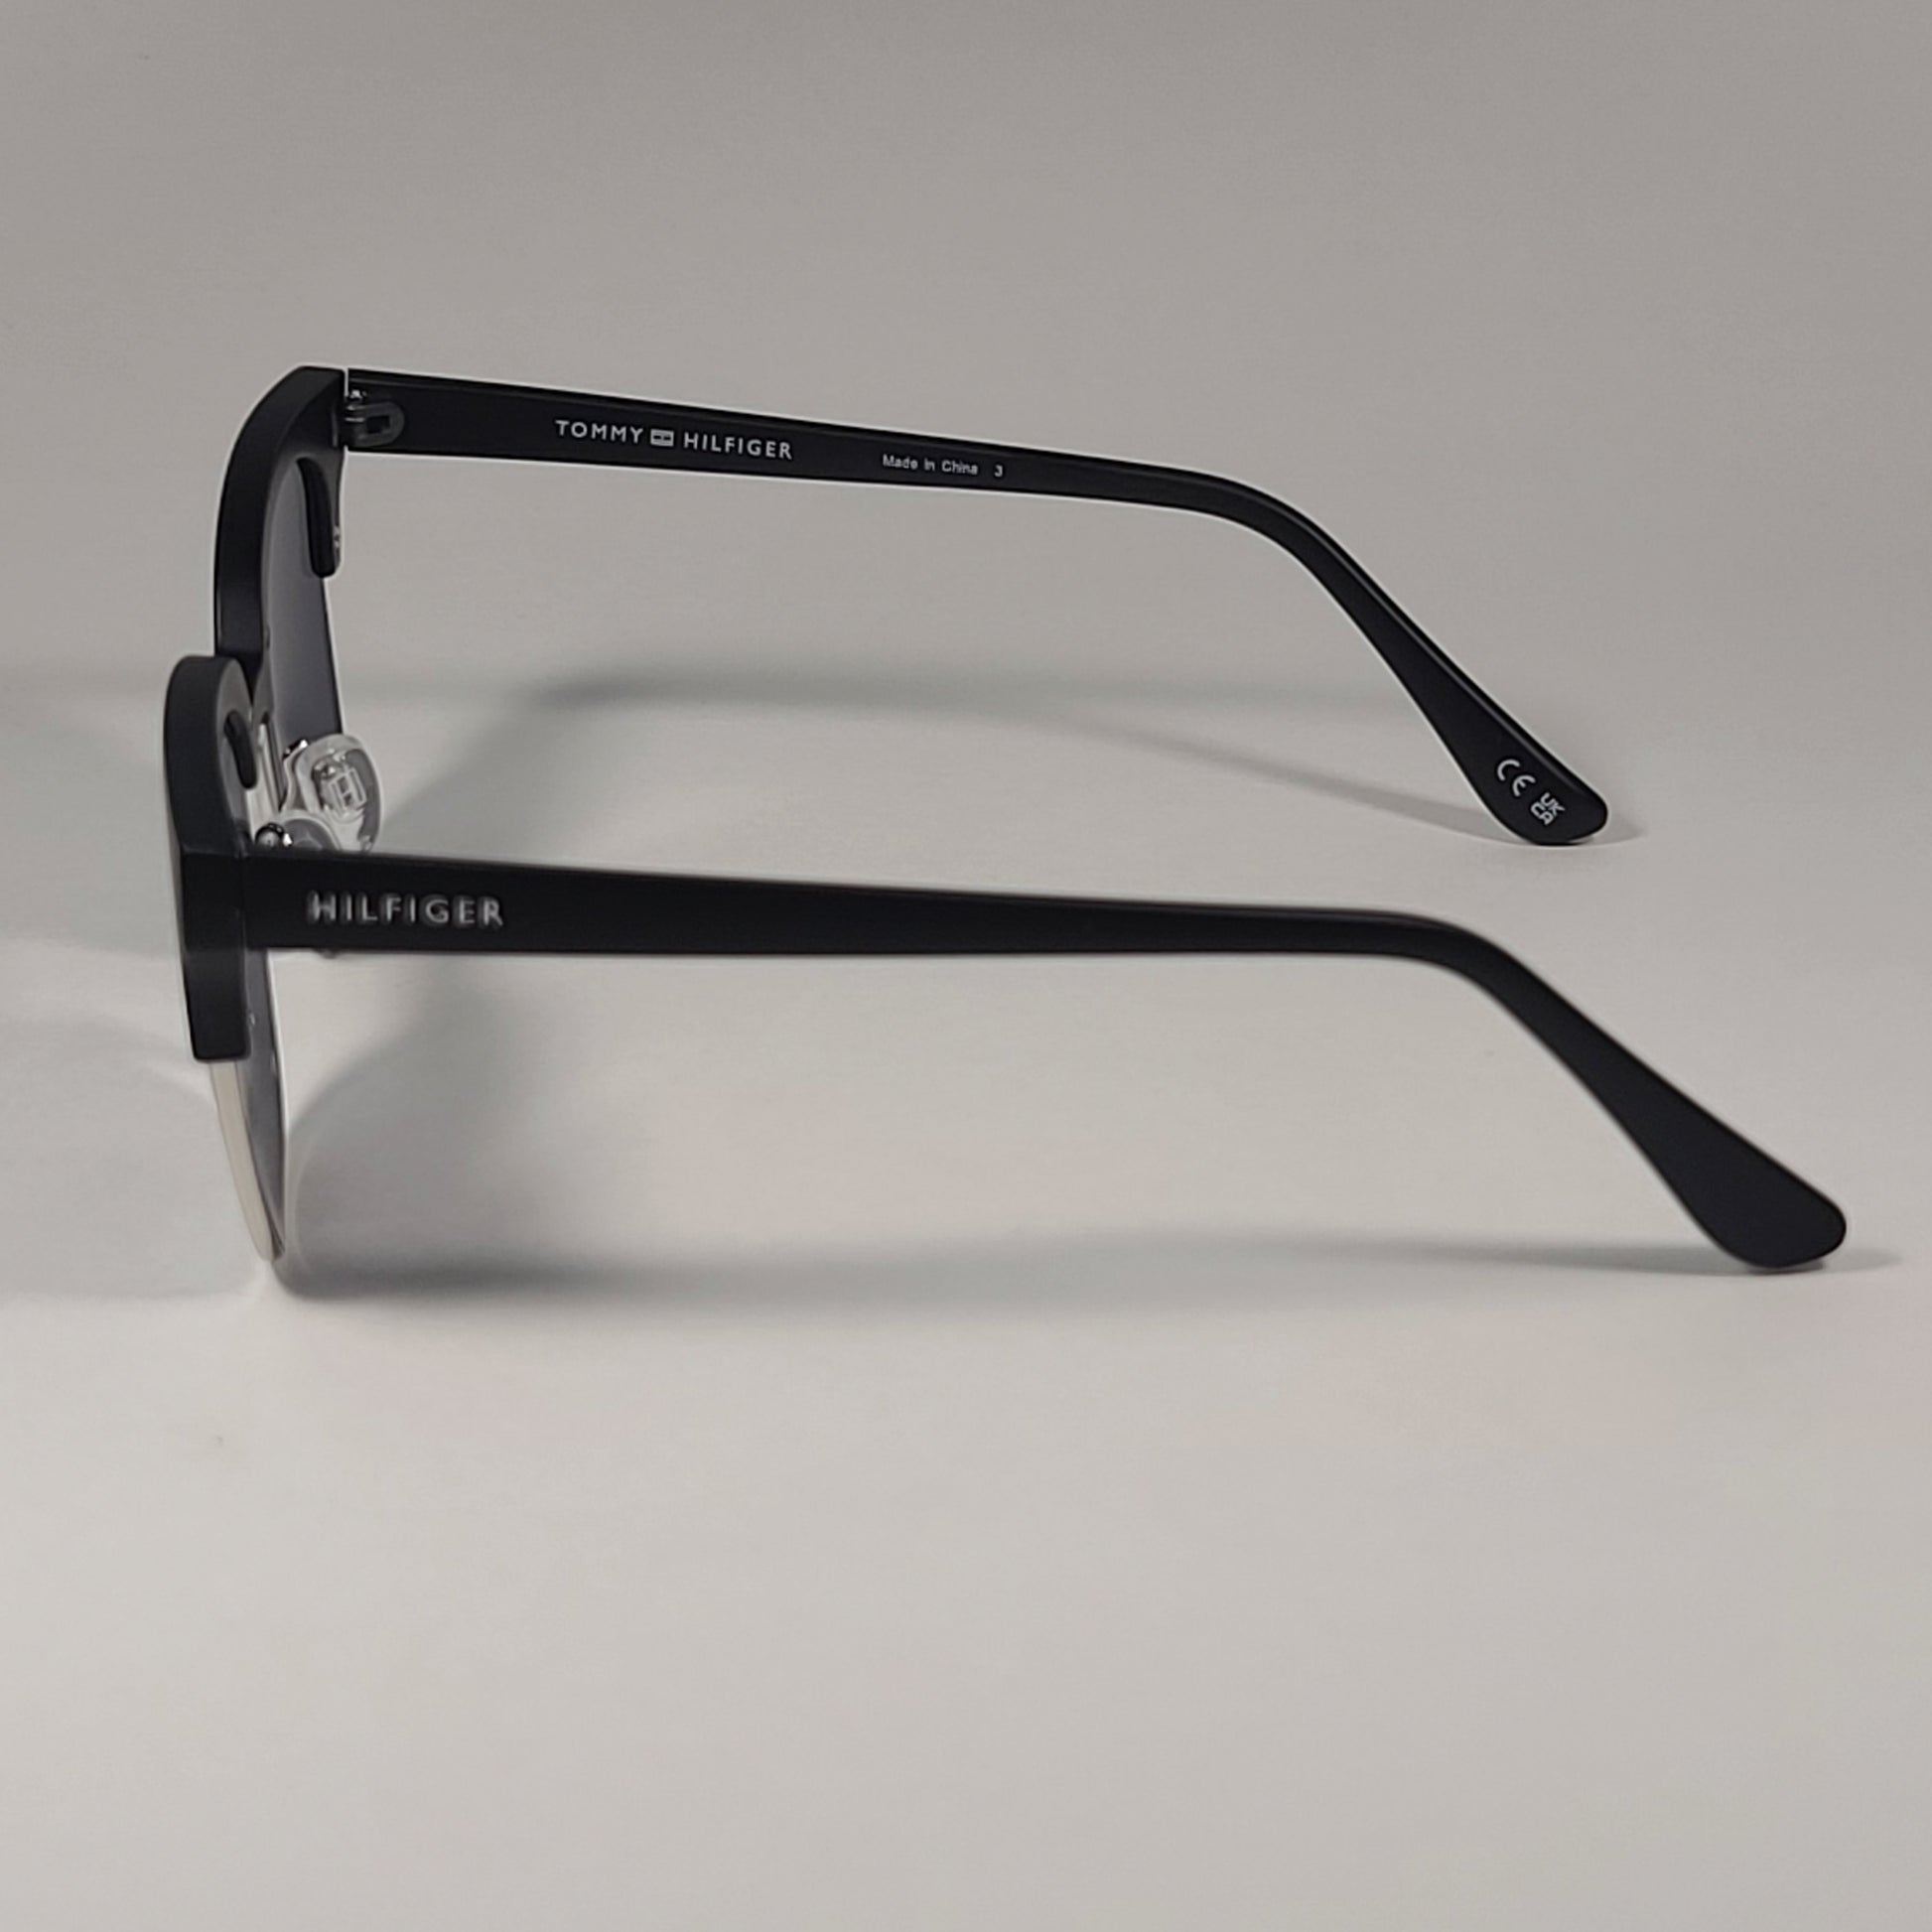 Tommy Hilfiger WP OU531 Square Club Sunglasses Matte Black Silver Frame Gray Lens - Sunglasses